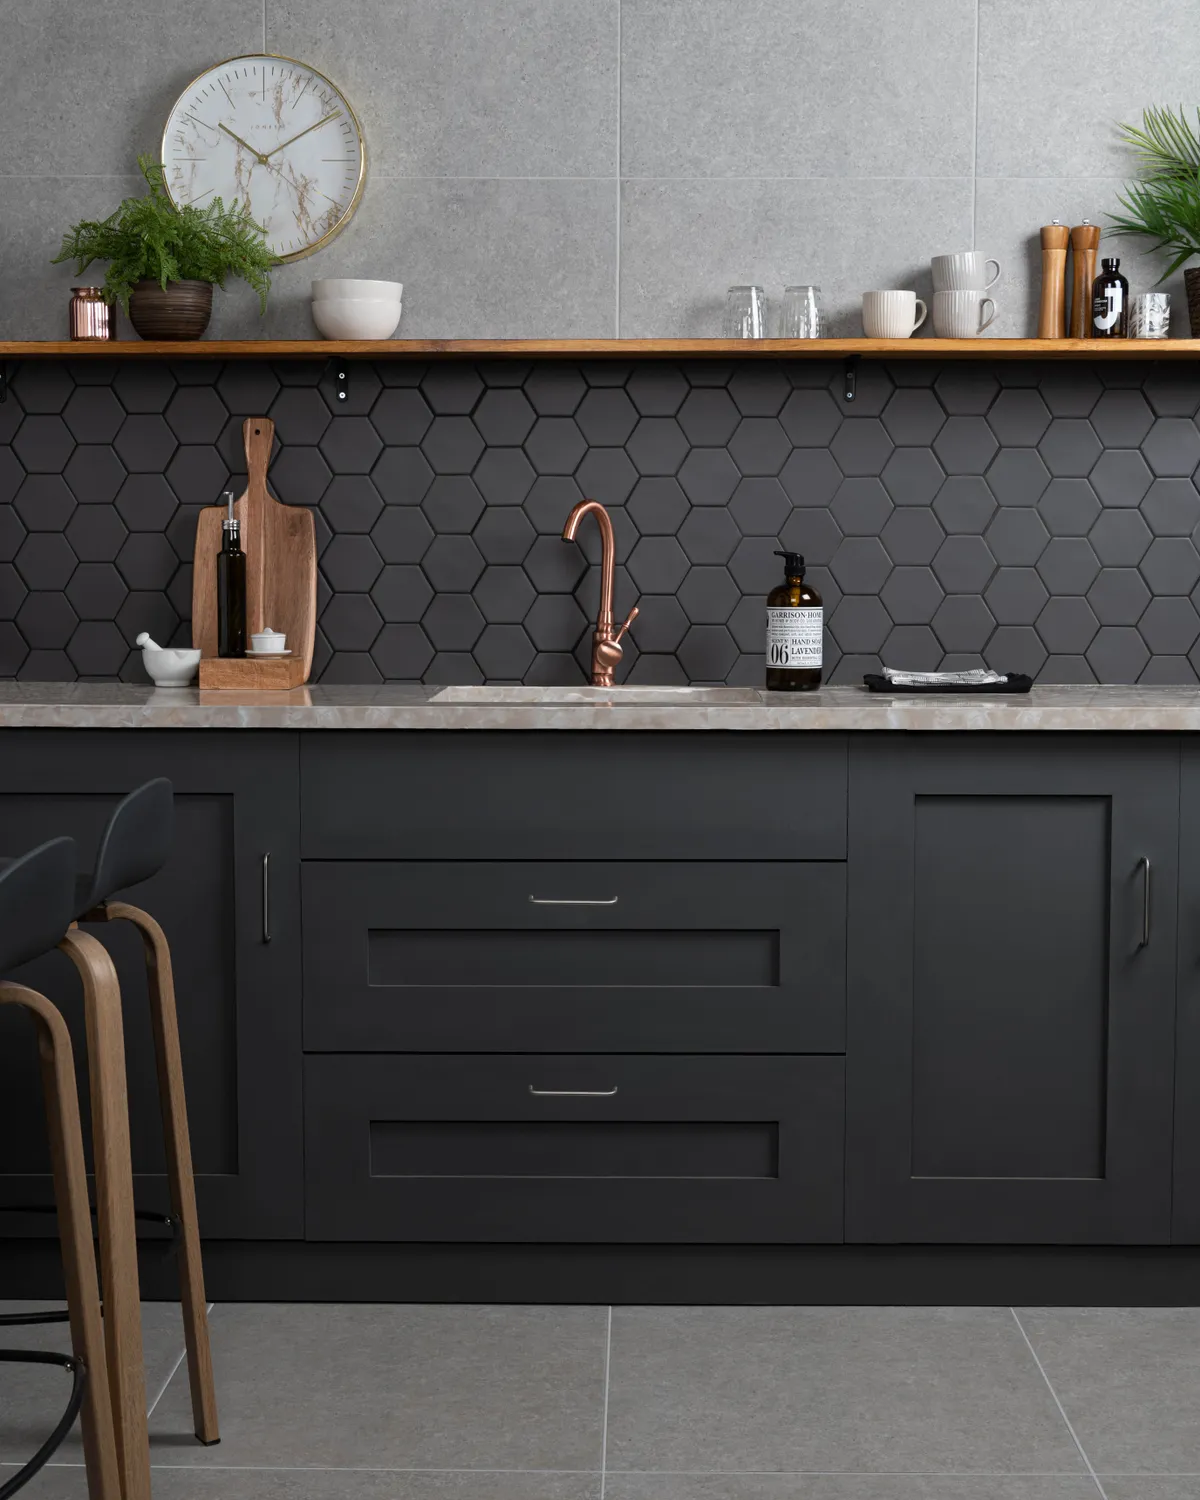 kitchen splashback ideas - black geometric tiles